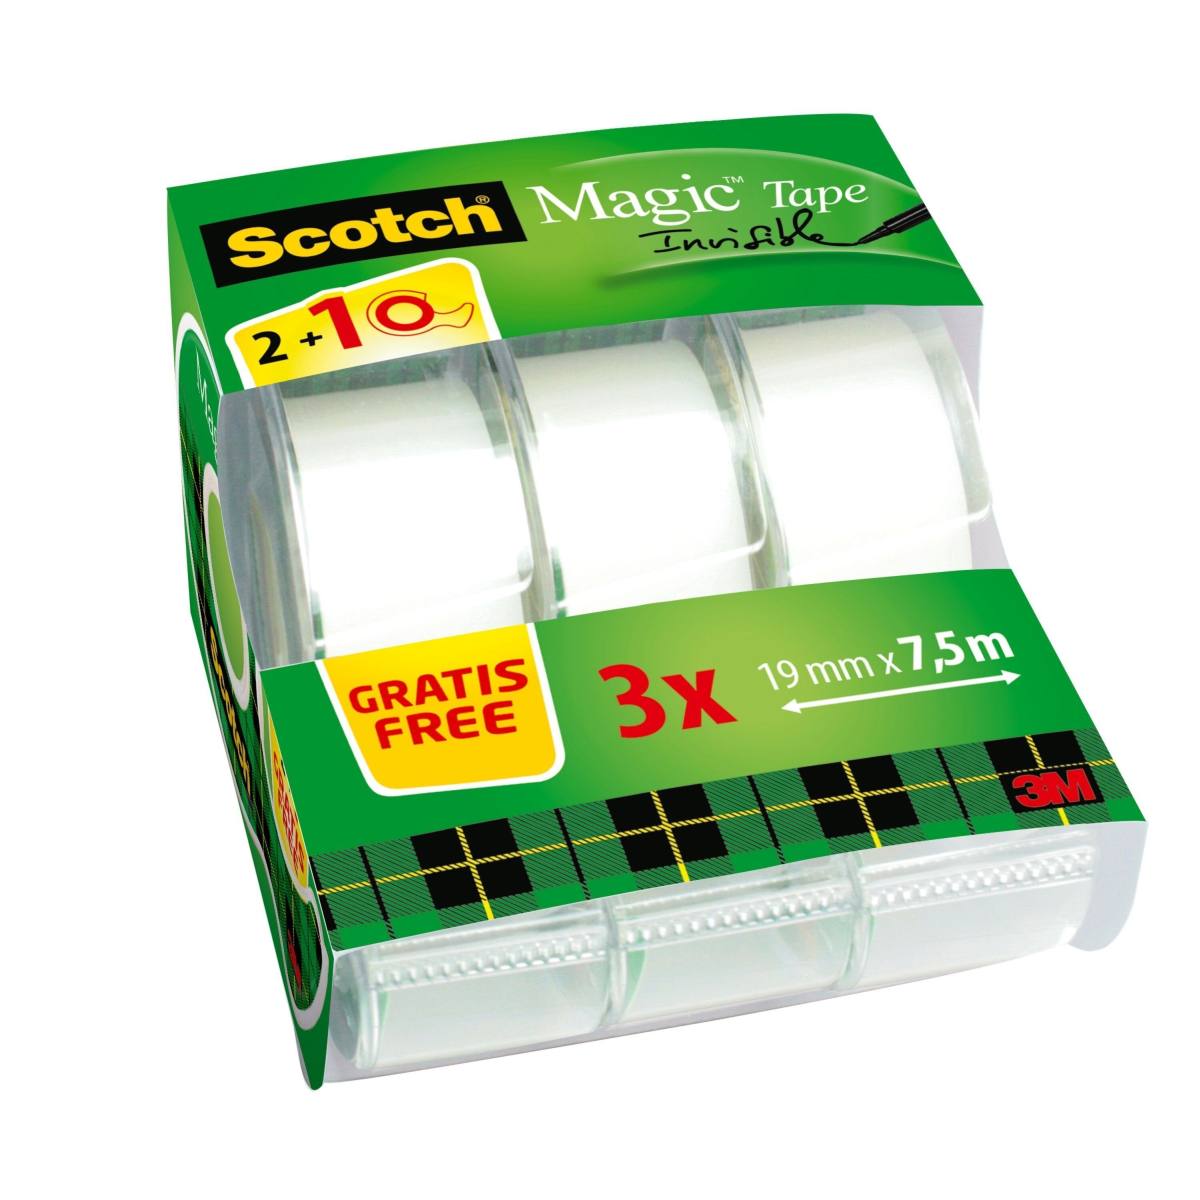 3M Scotch Magic Adhesive Tape Caddy Pack 2 rotoli + 1 OMAGGIO 19 mm x 7,5 m + dispenser manuale